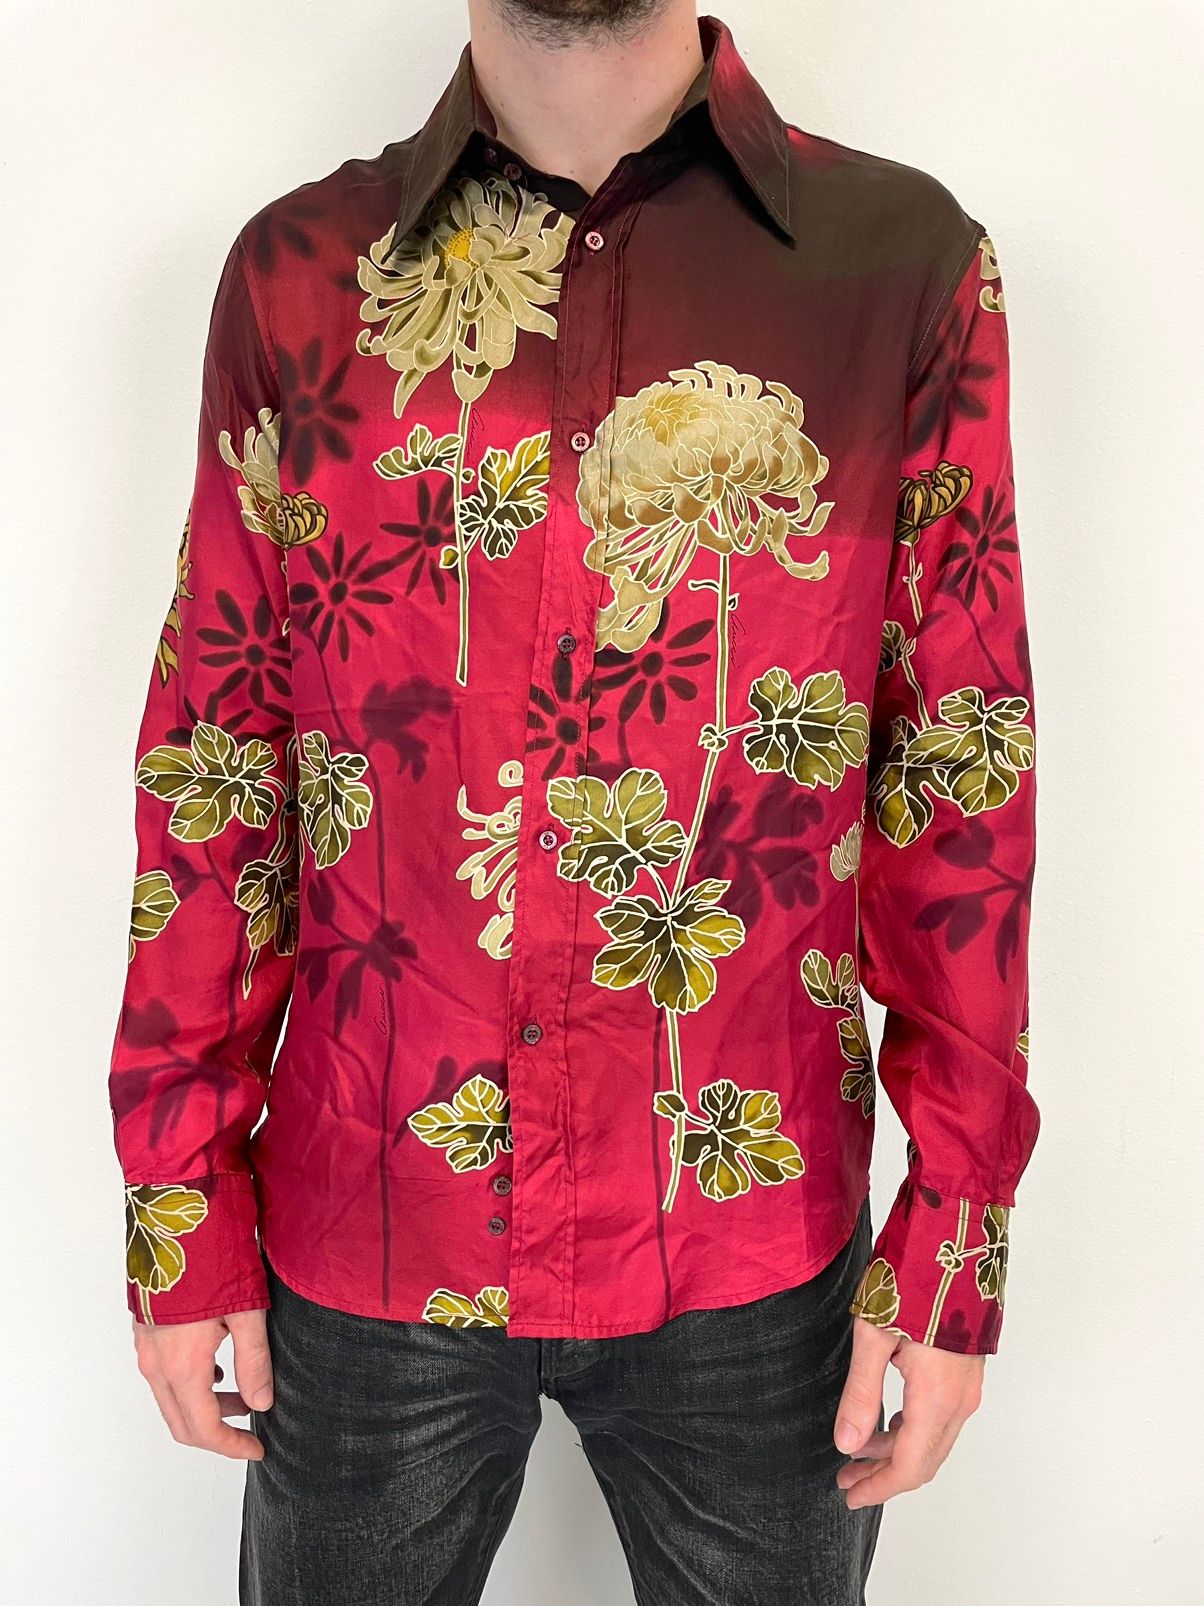 Gucci SS2001 Tom Ford Chrysanthemum floral Print Silk Shirt rare Size US M / EU 48-50 / 2 - 1 Preview